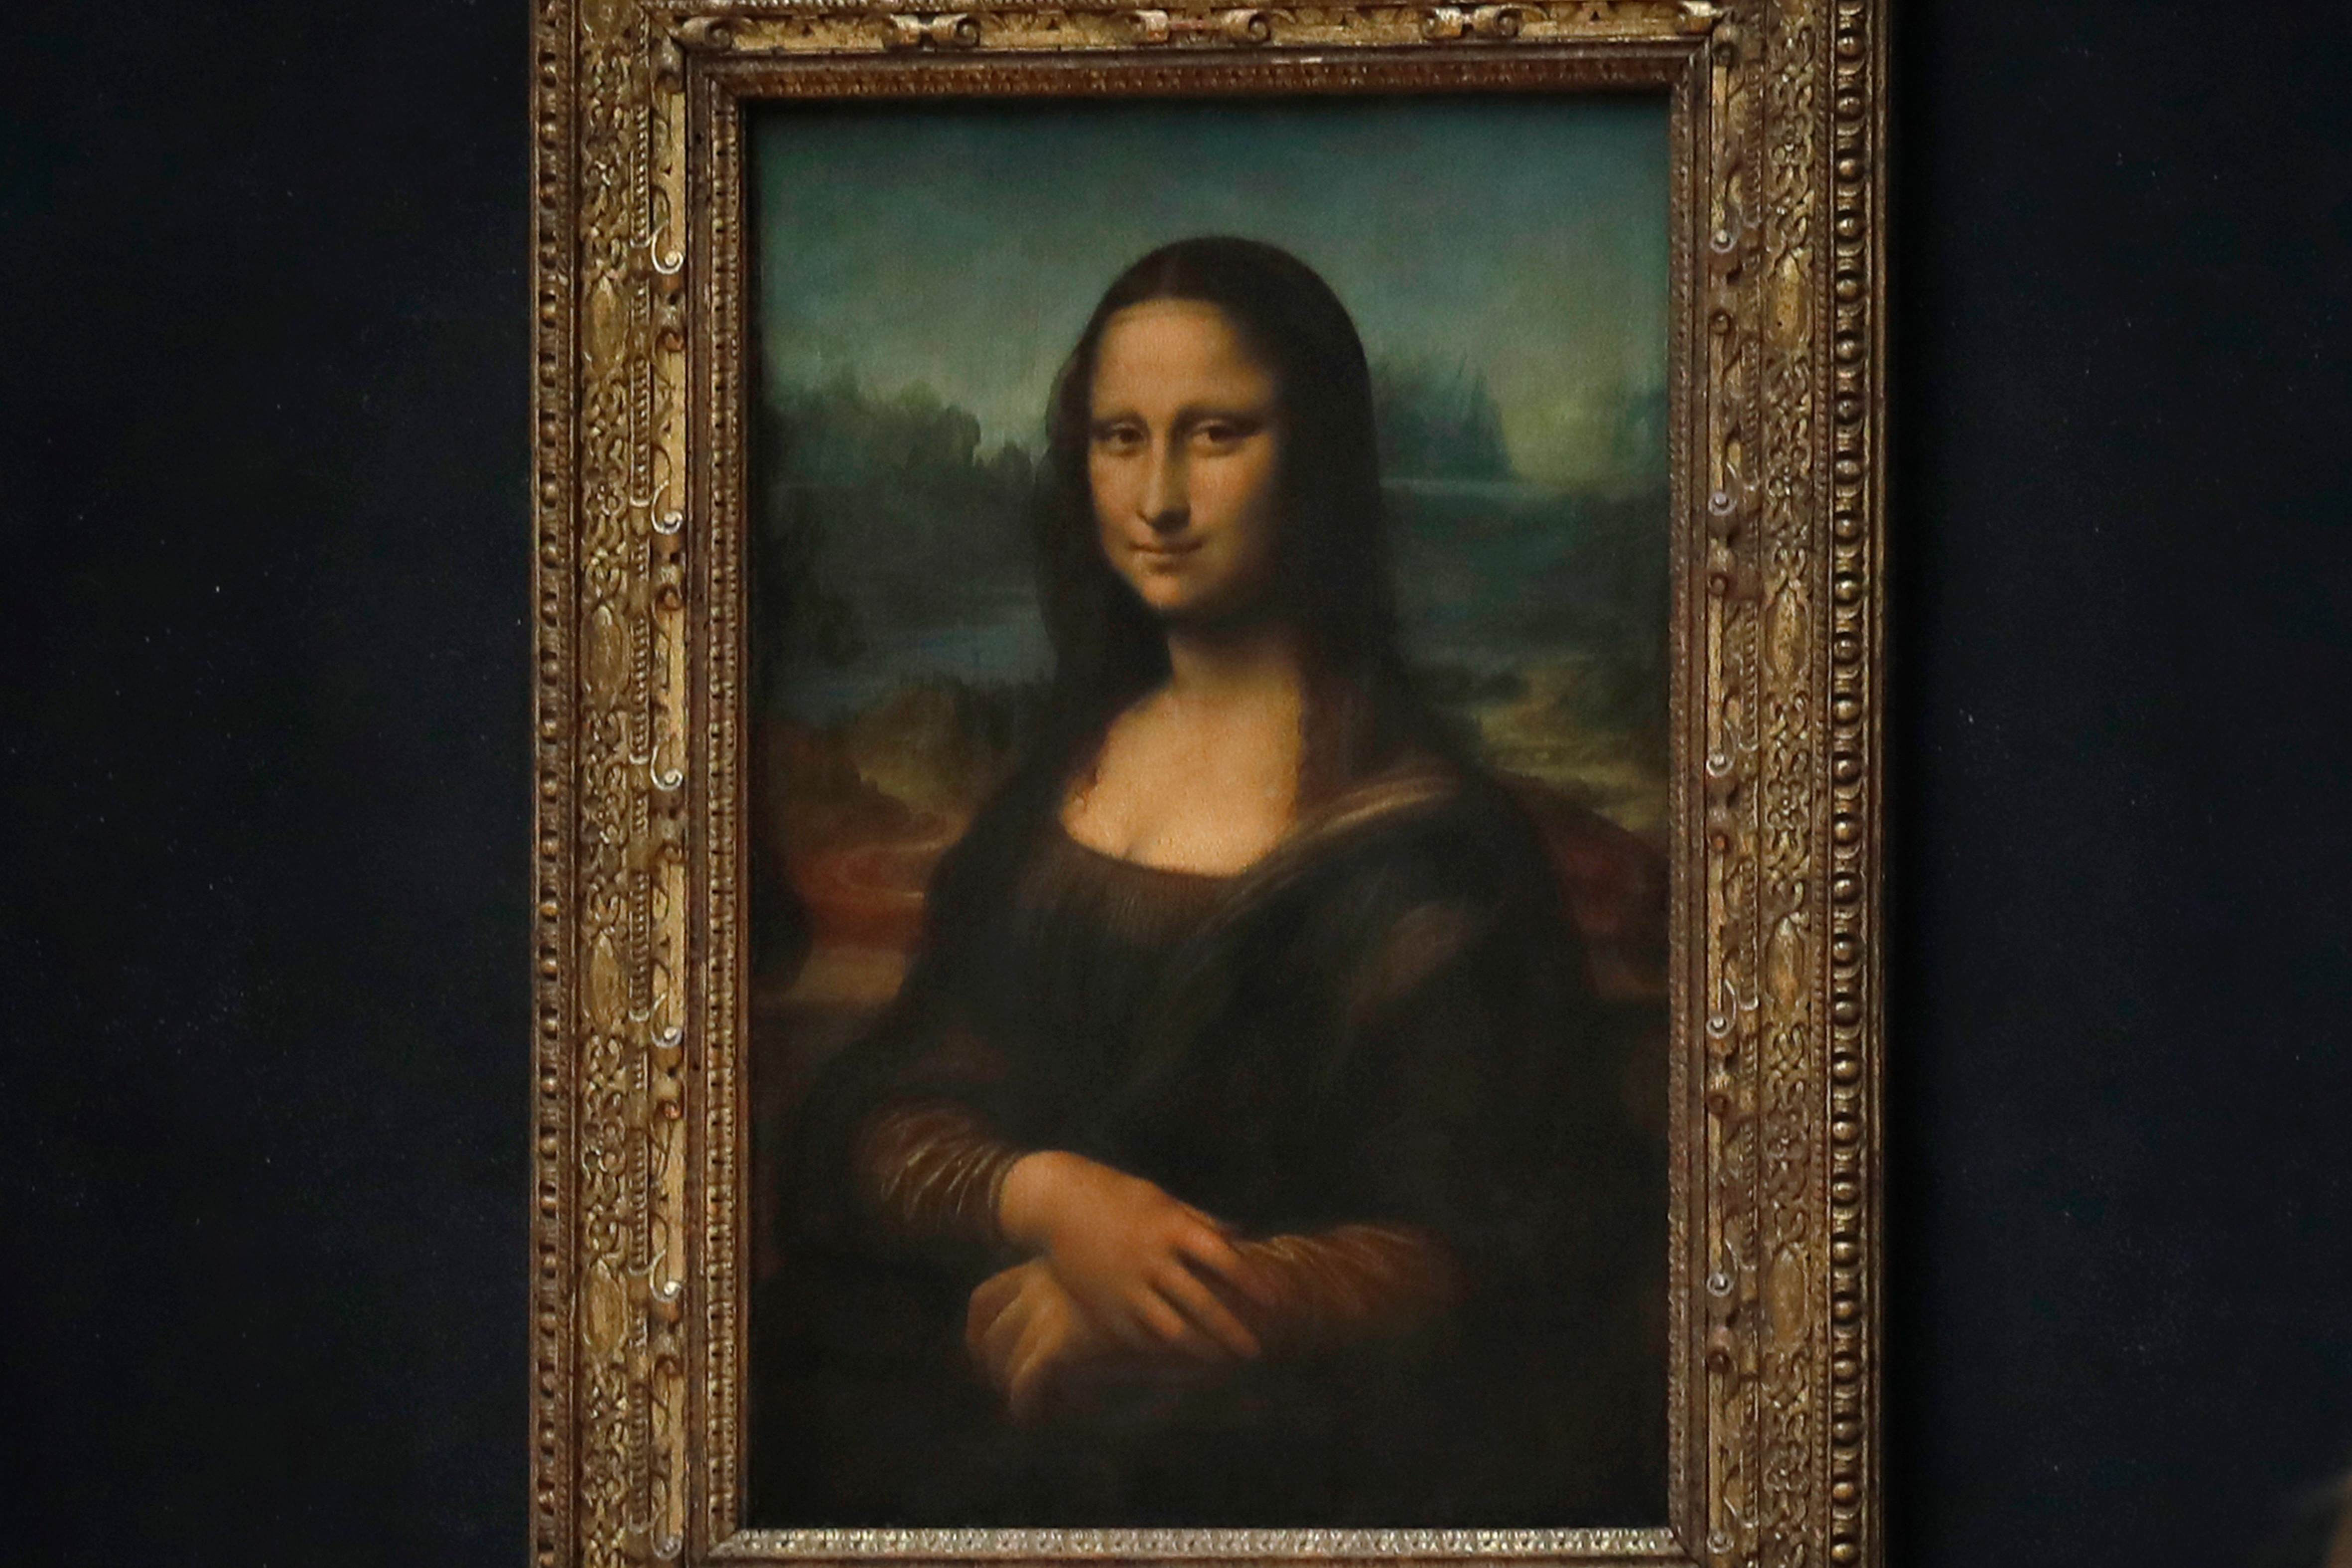 Nude Mona Lisa' may have been drawn by Leonardo da Vinci